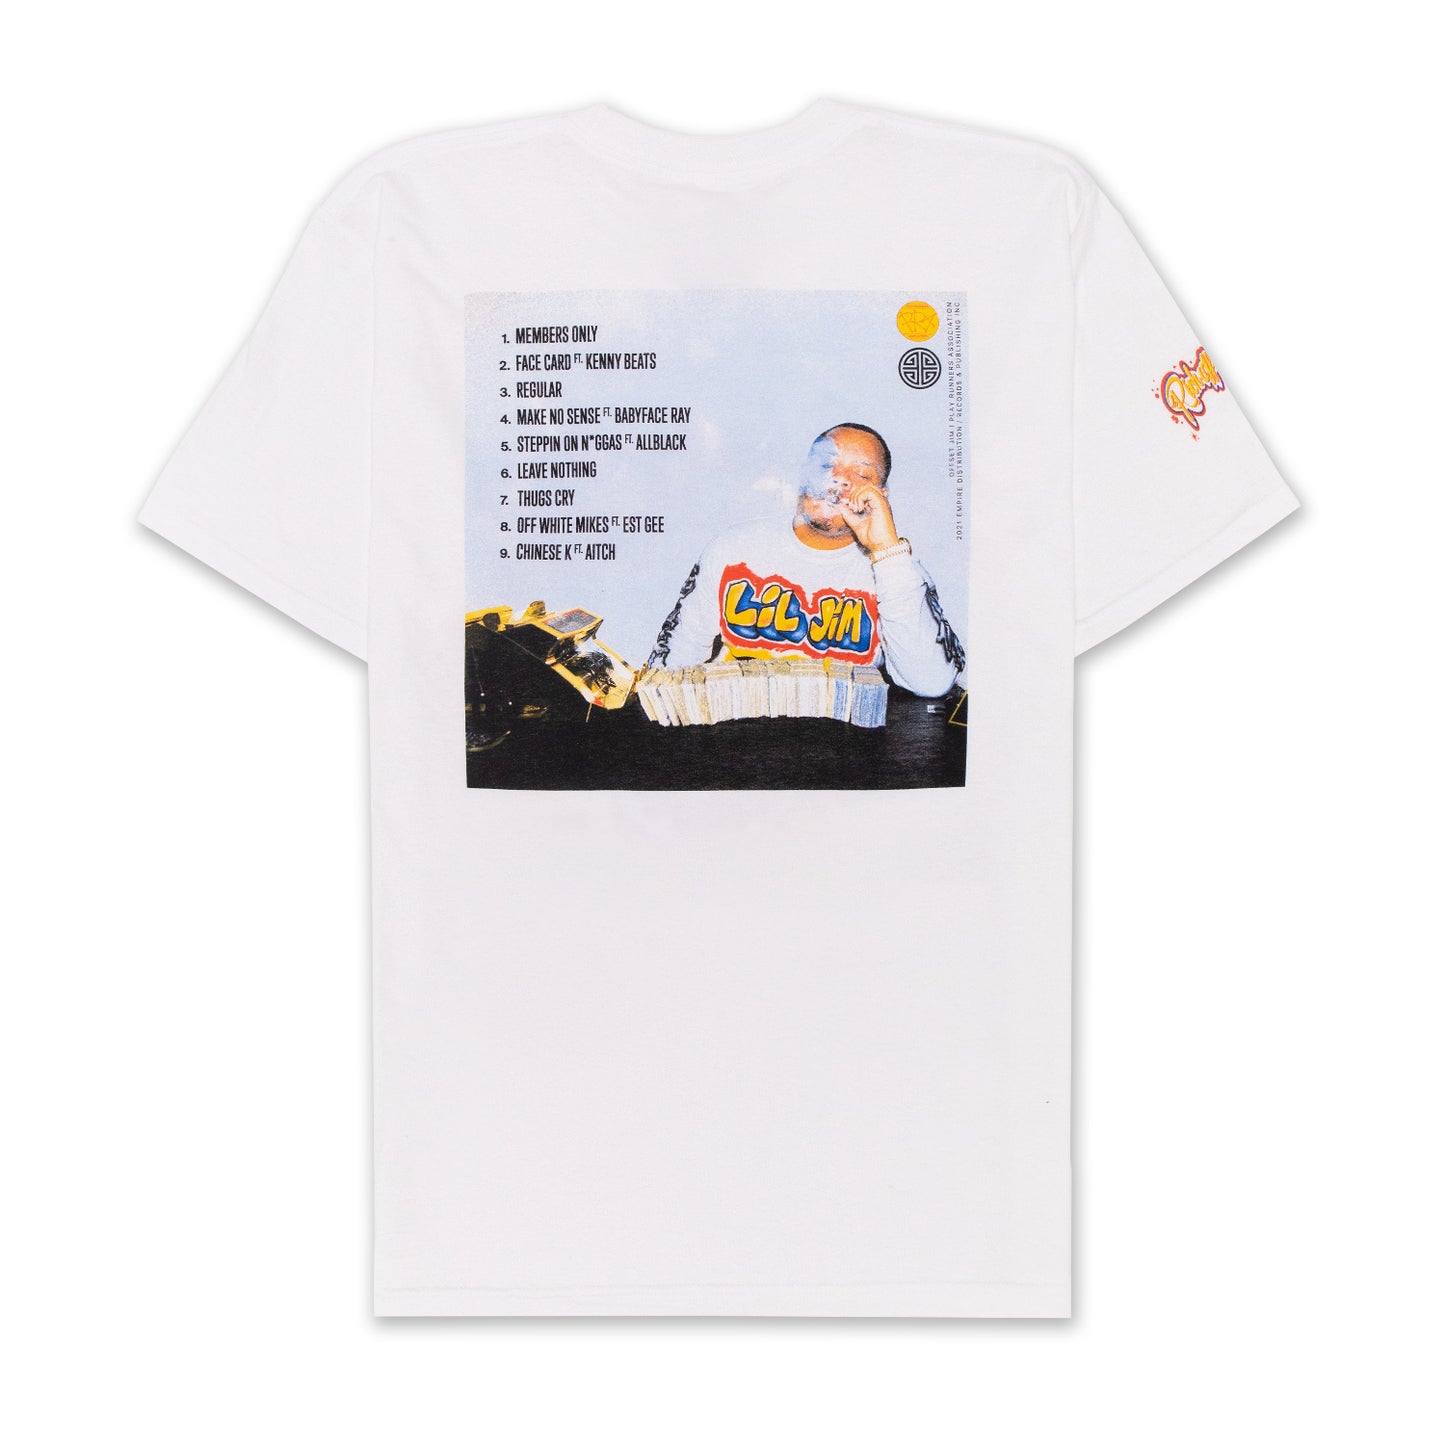 Offset Jim - ROTP Album T-shirt (White)